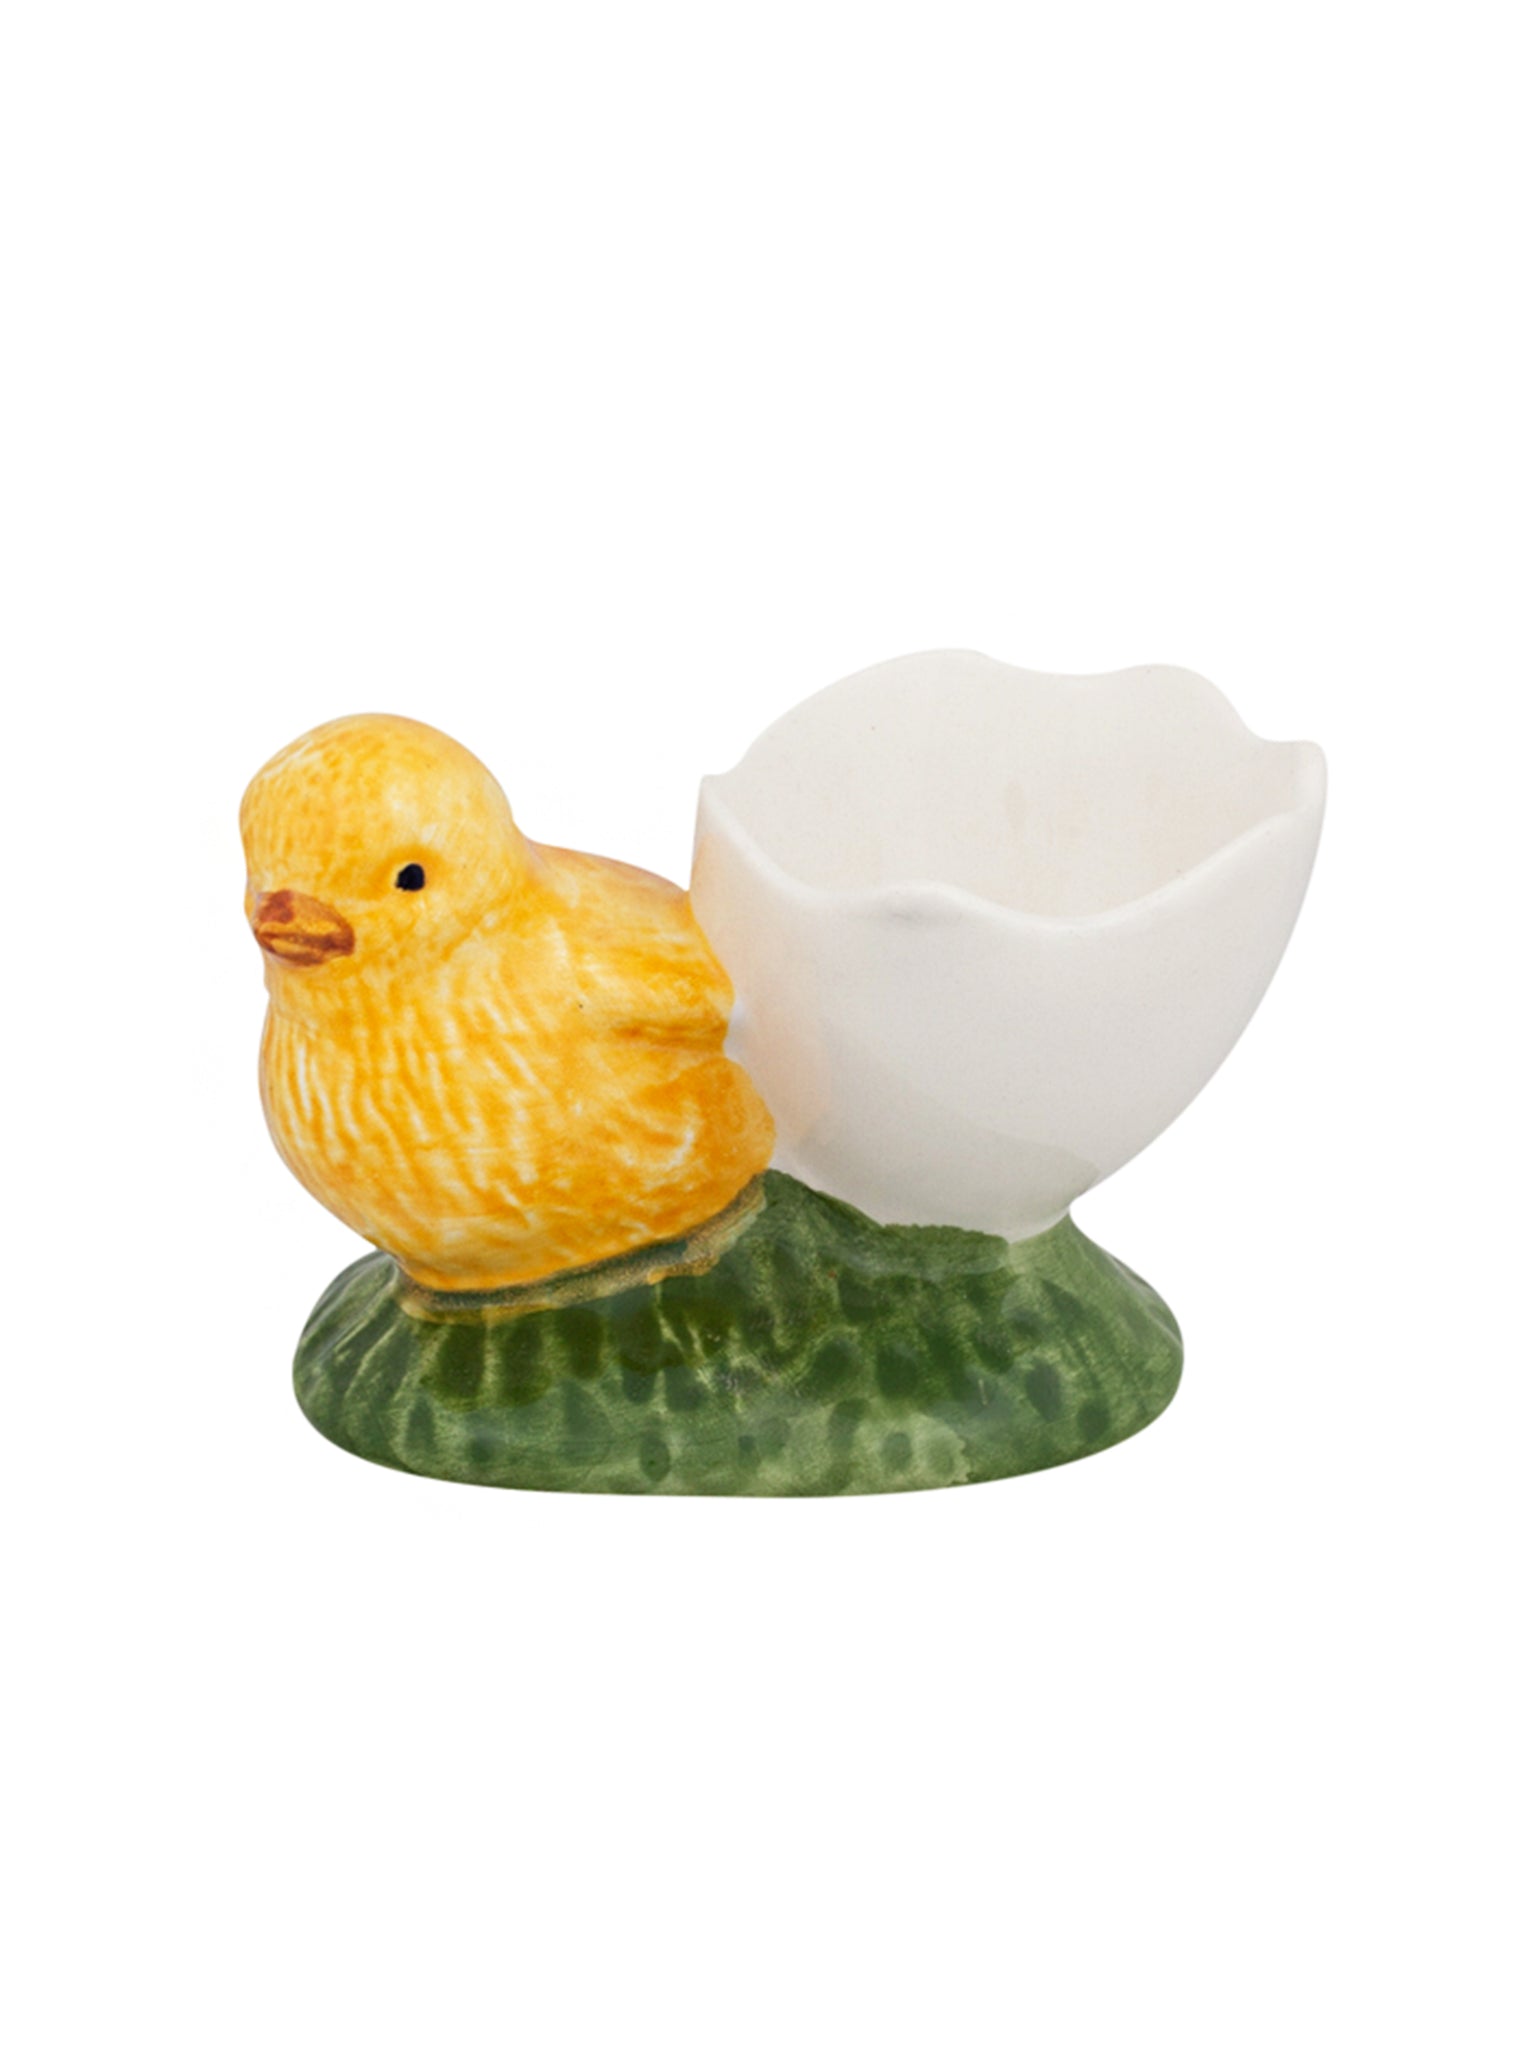 Bordallo Pinheiro Egg Cup Eggshell with Chick Weston Table